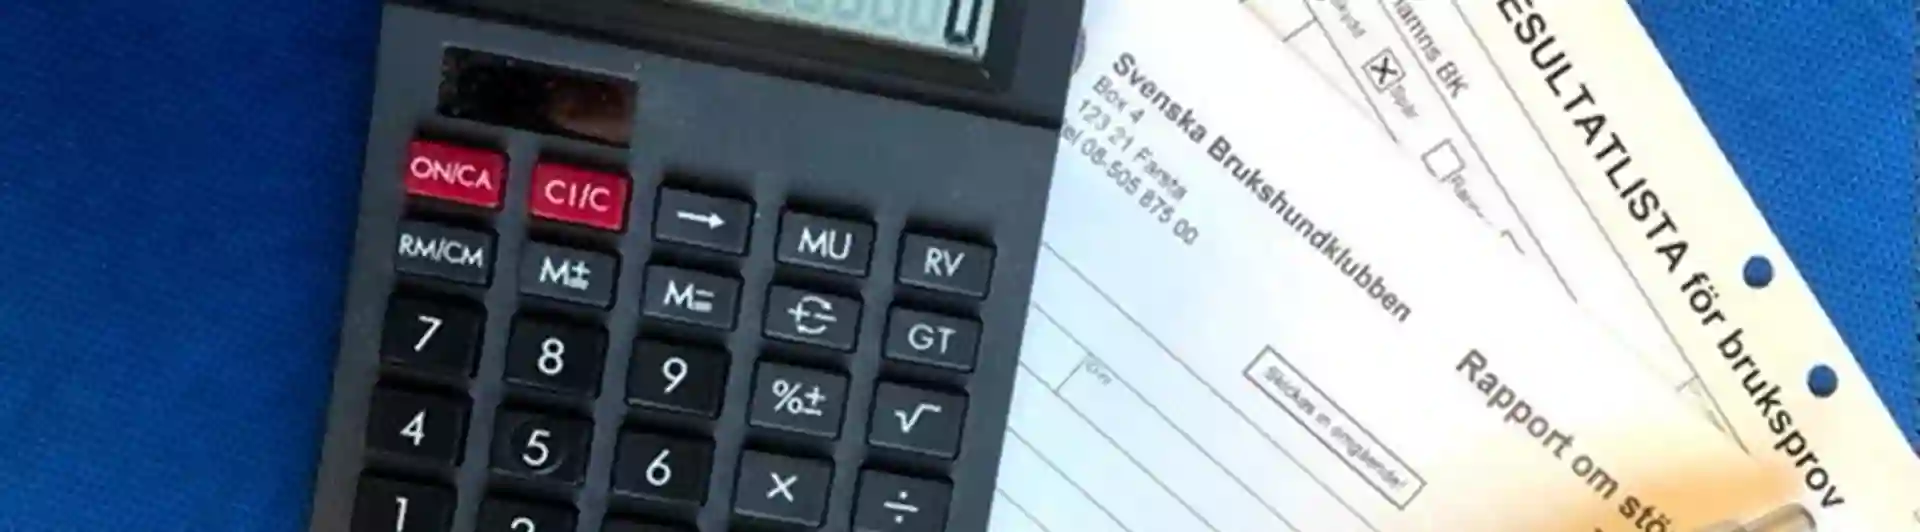 Miniräknare dokument penna